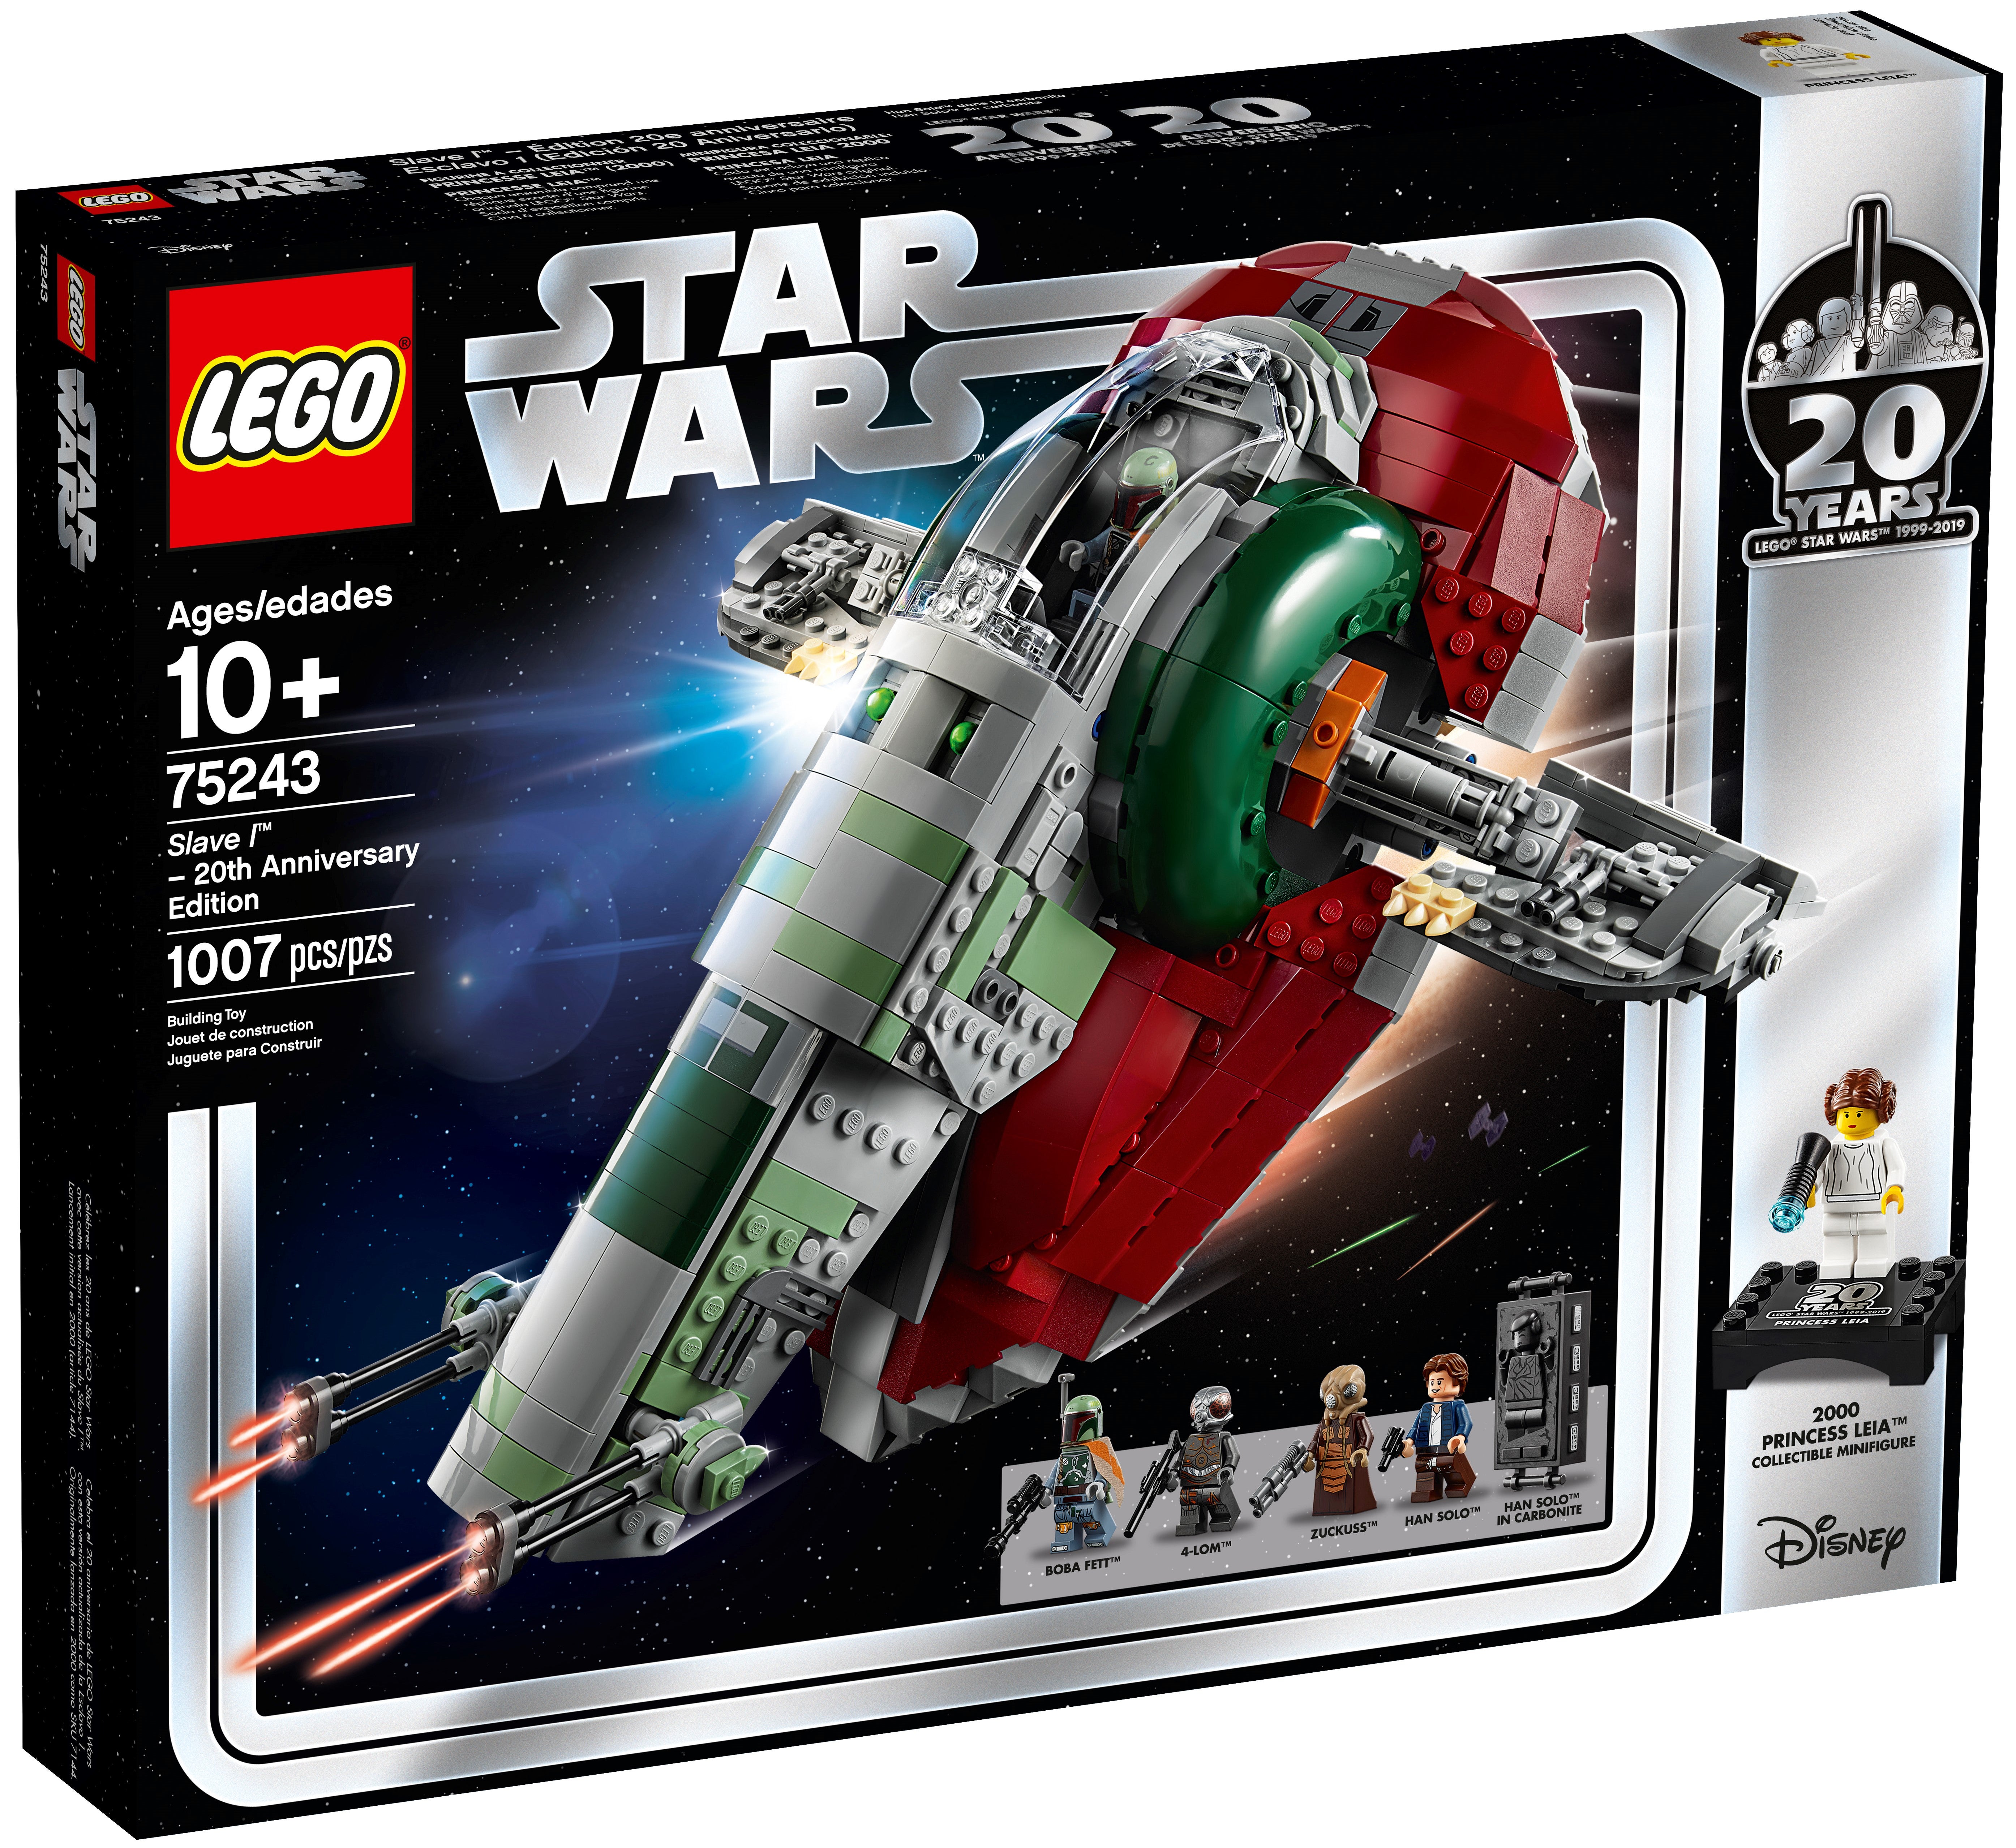 NEW LEGO Star Wars 75243 Slave I 20th Anniversary